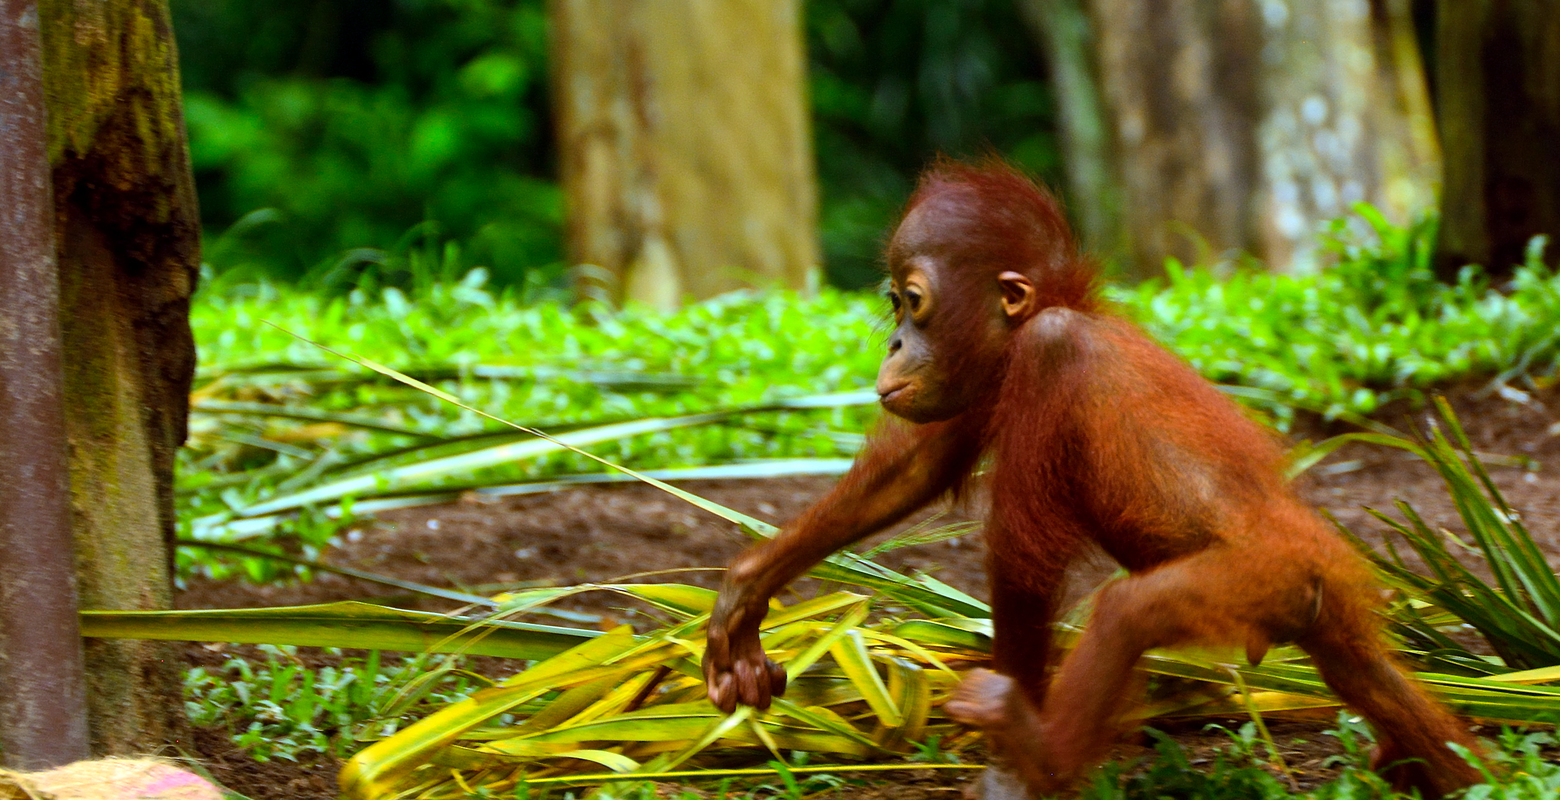 Sumatran orangutan walking through the forest happily